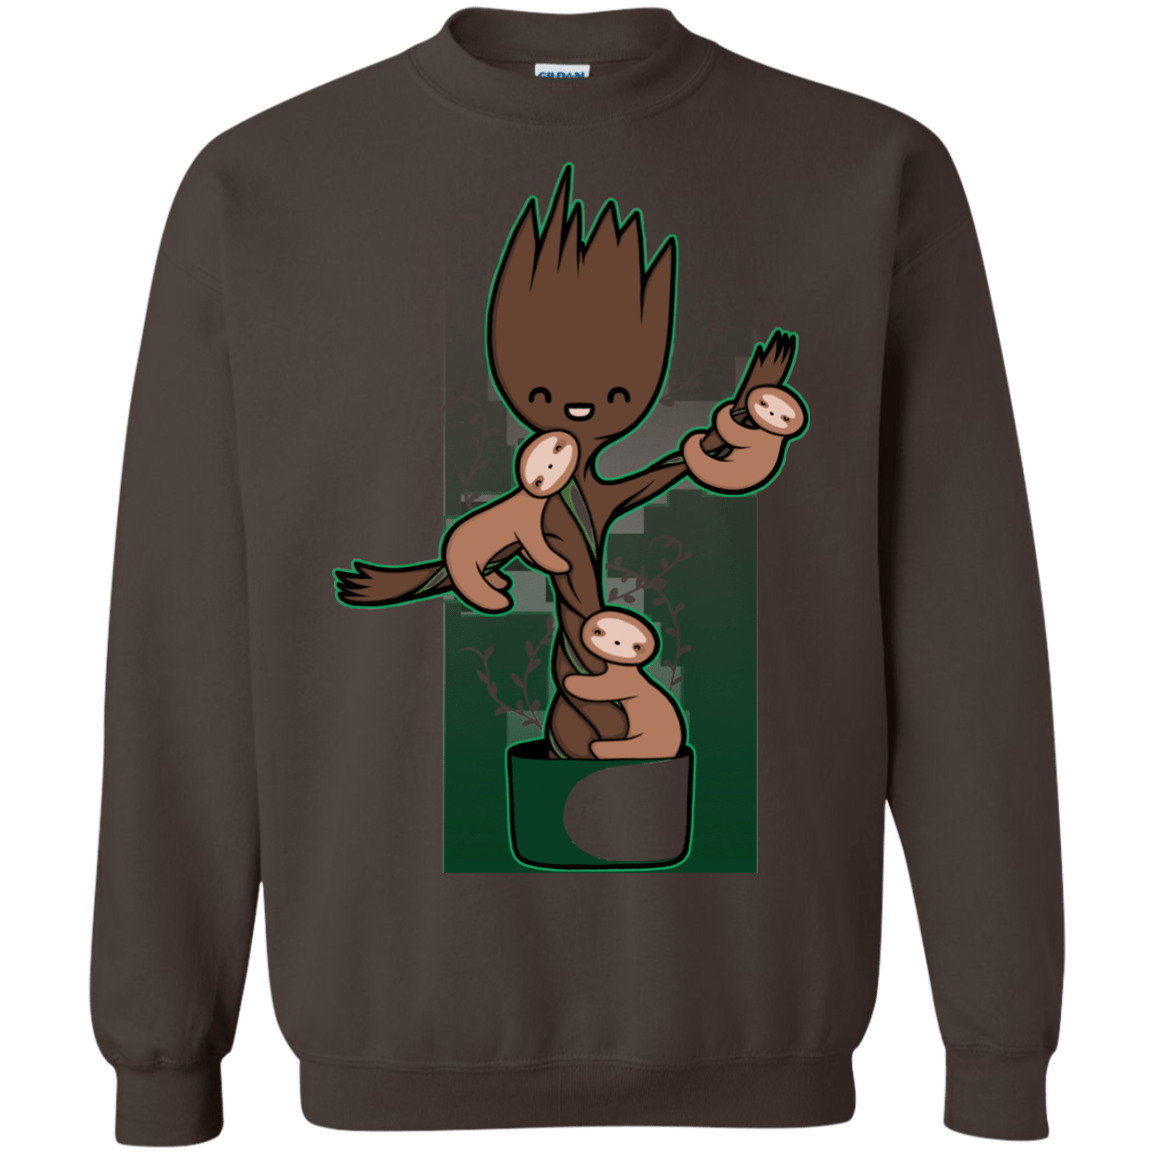 Sweatshirts Dark Chocolate / Small Chilling Out Crewneck Sweatshirt